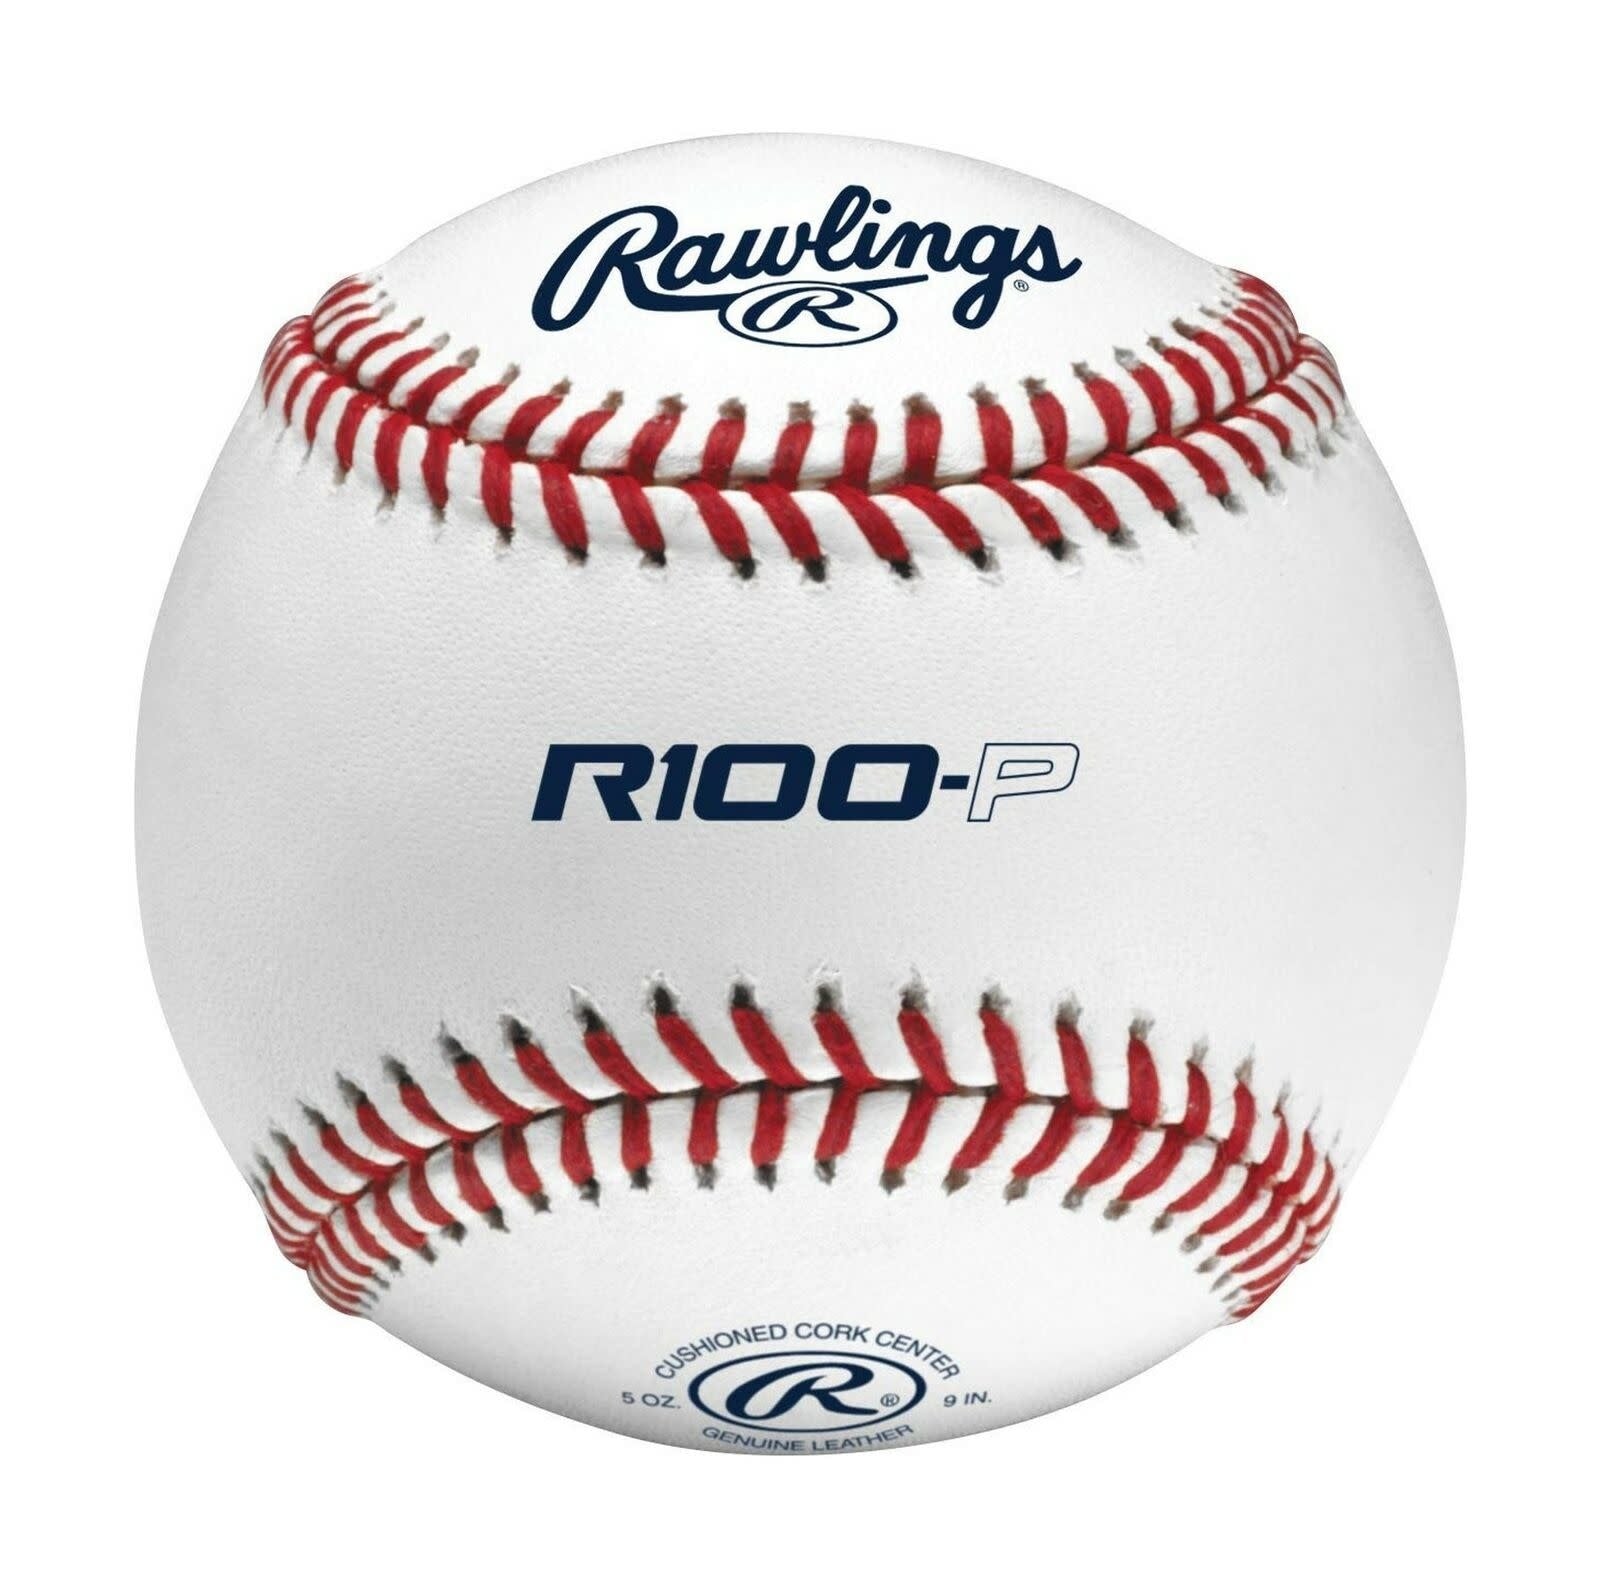 Rawlings High School Baseballs R100-P Dozen